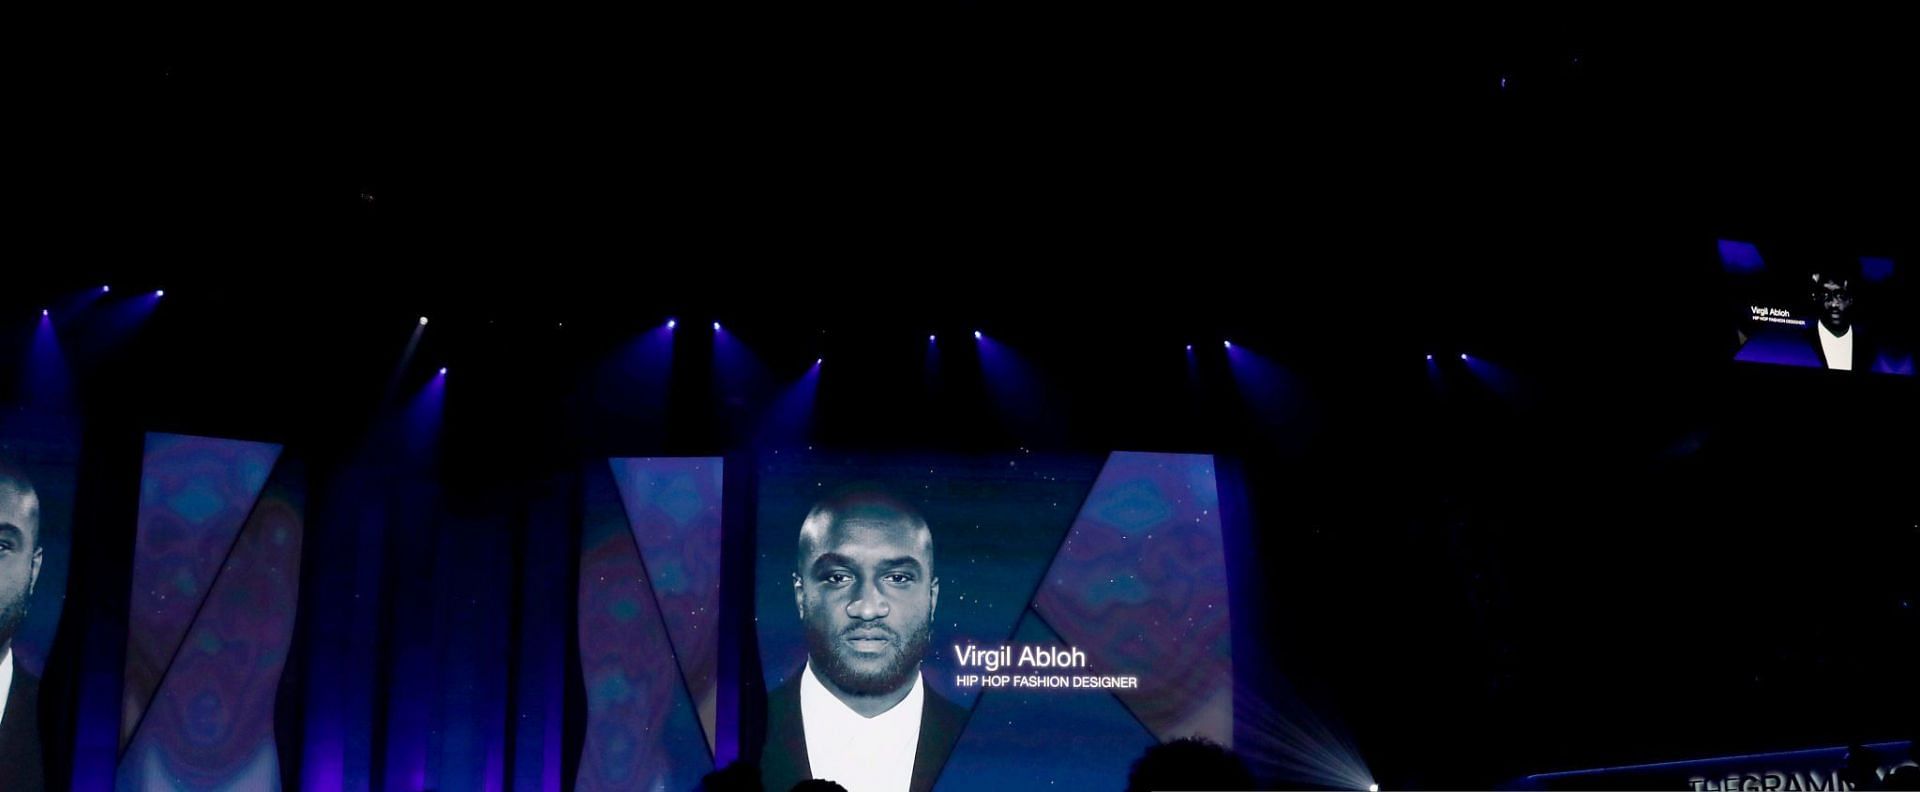 Virgil Abloh was honoured at the Grammys – but WTF is a 'Hip Hop Designer'?